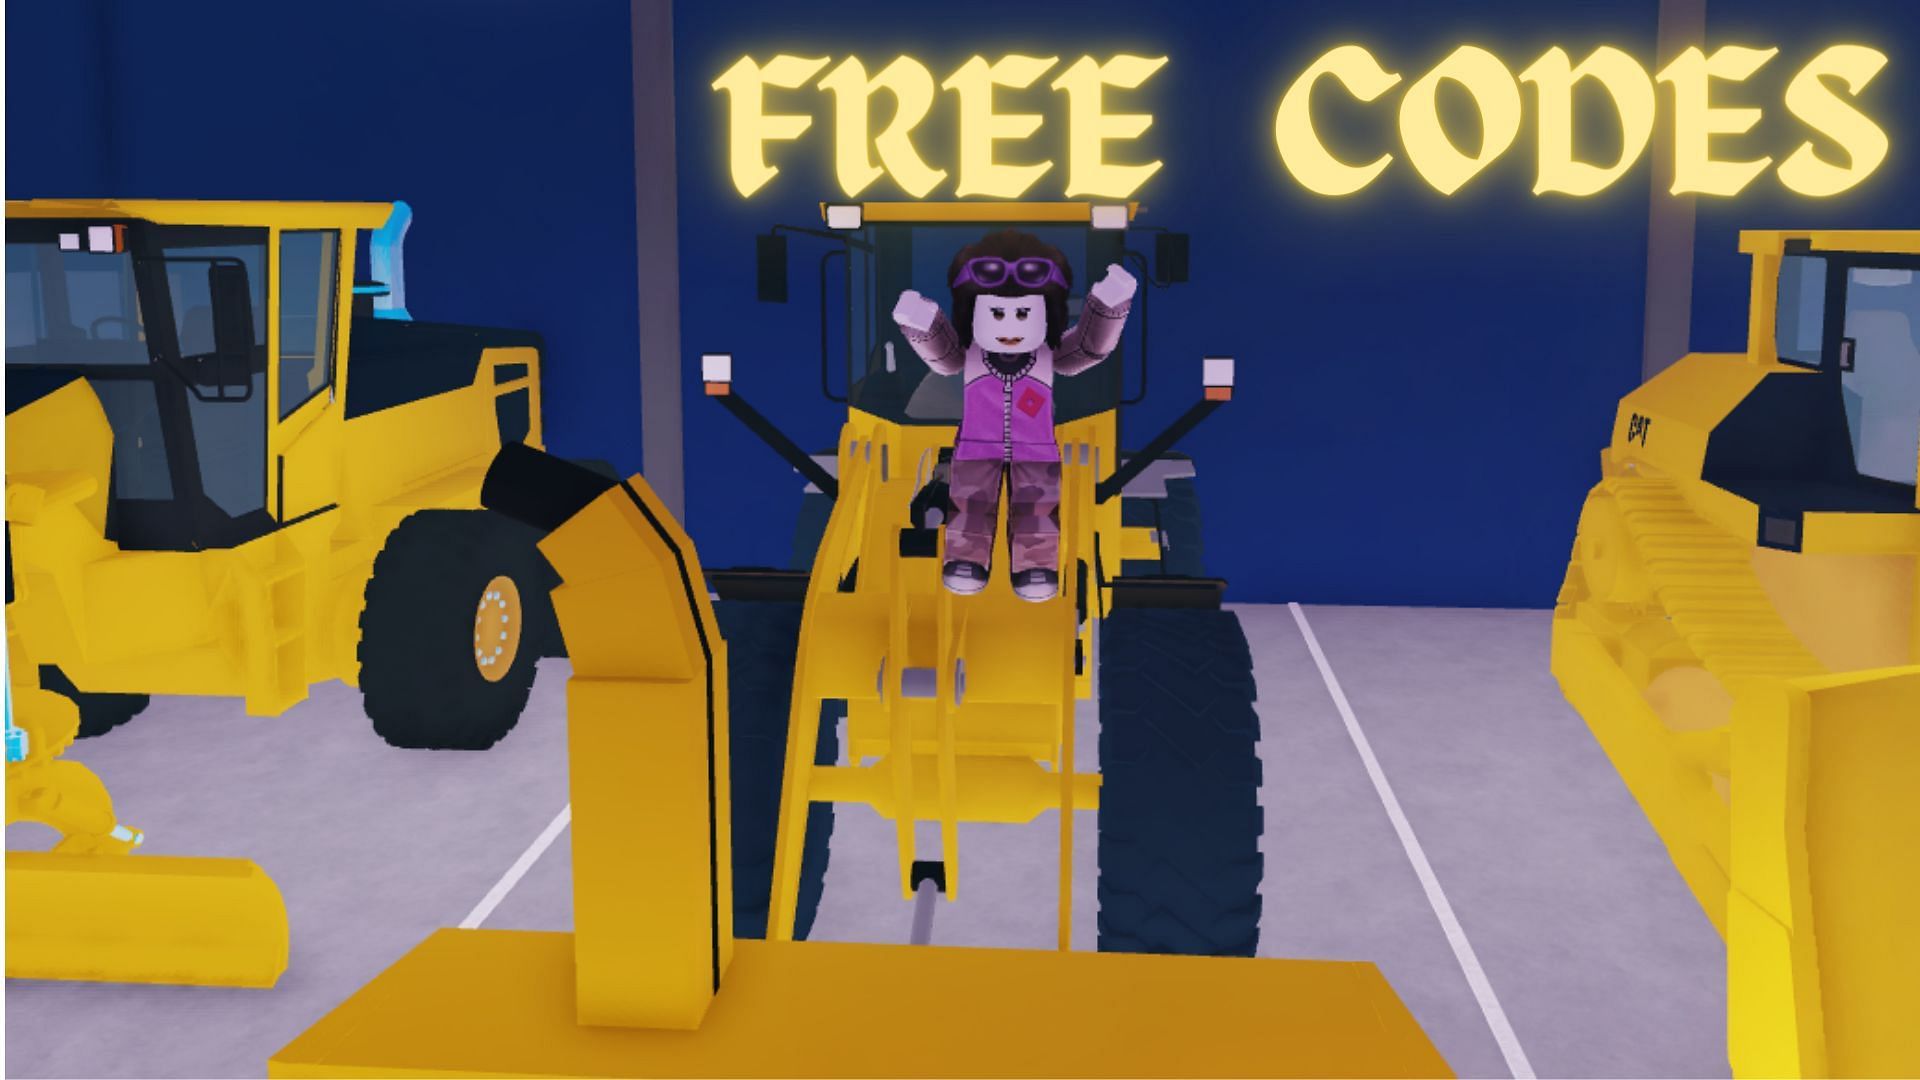 Free codes in Snow Plow Simulator (Image via Roblox)